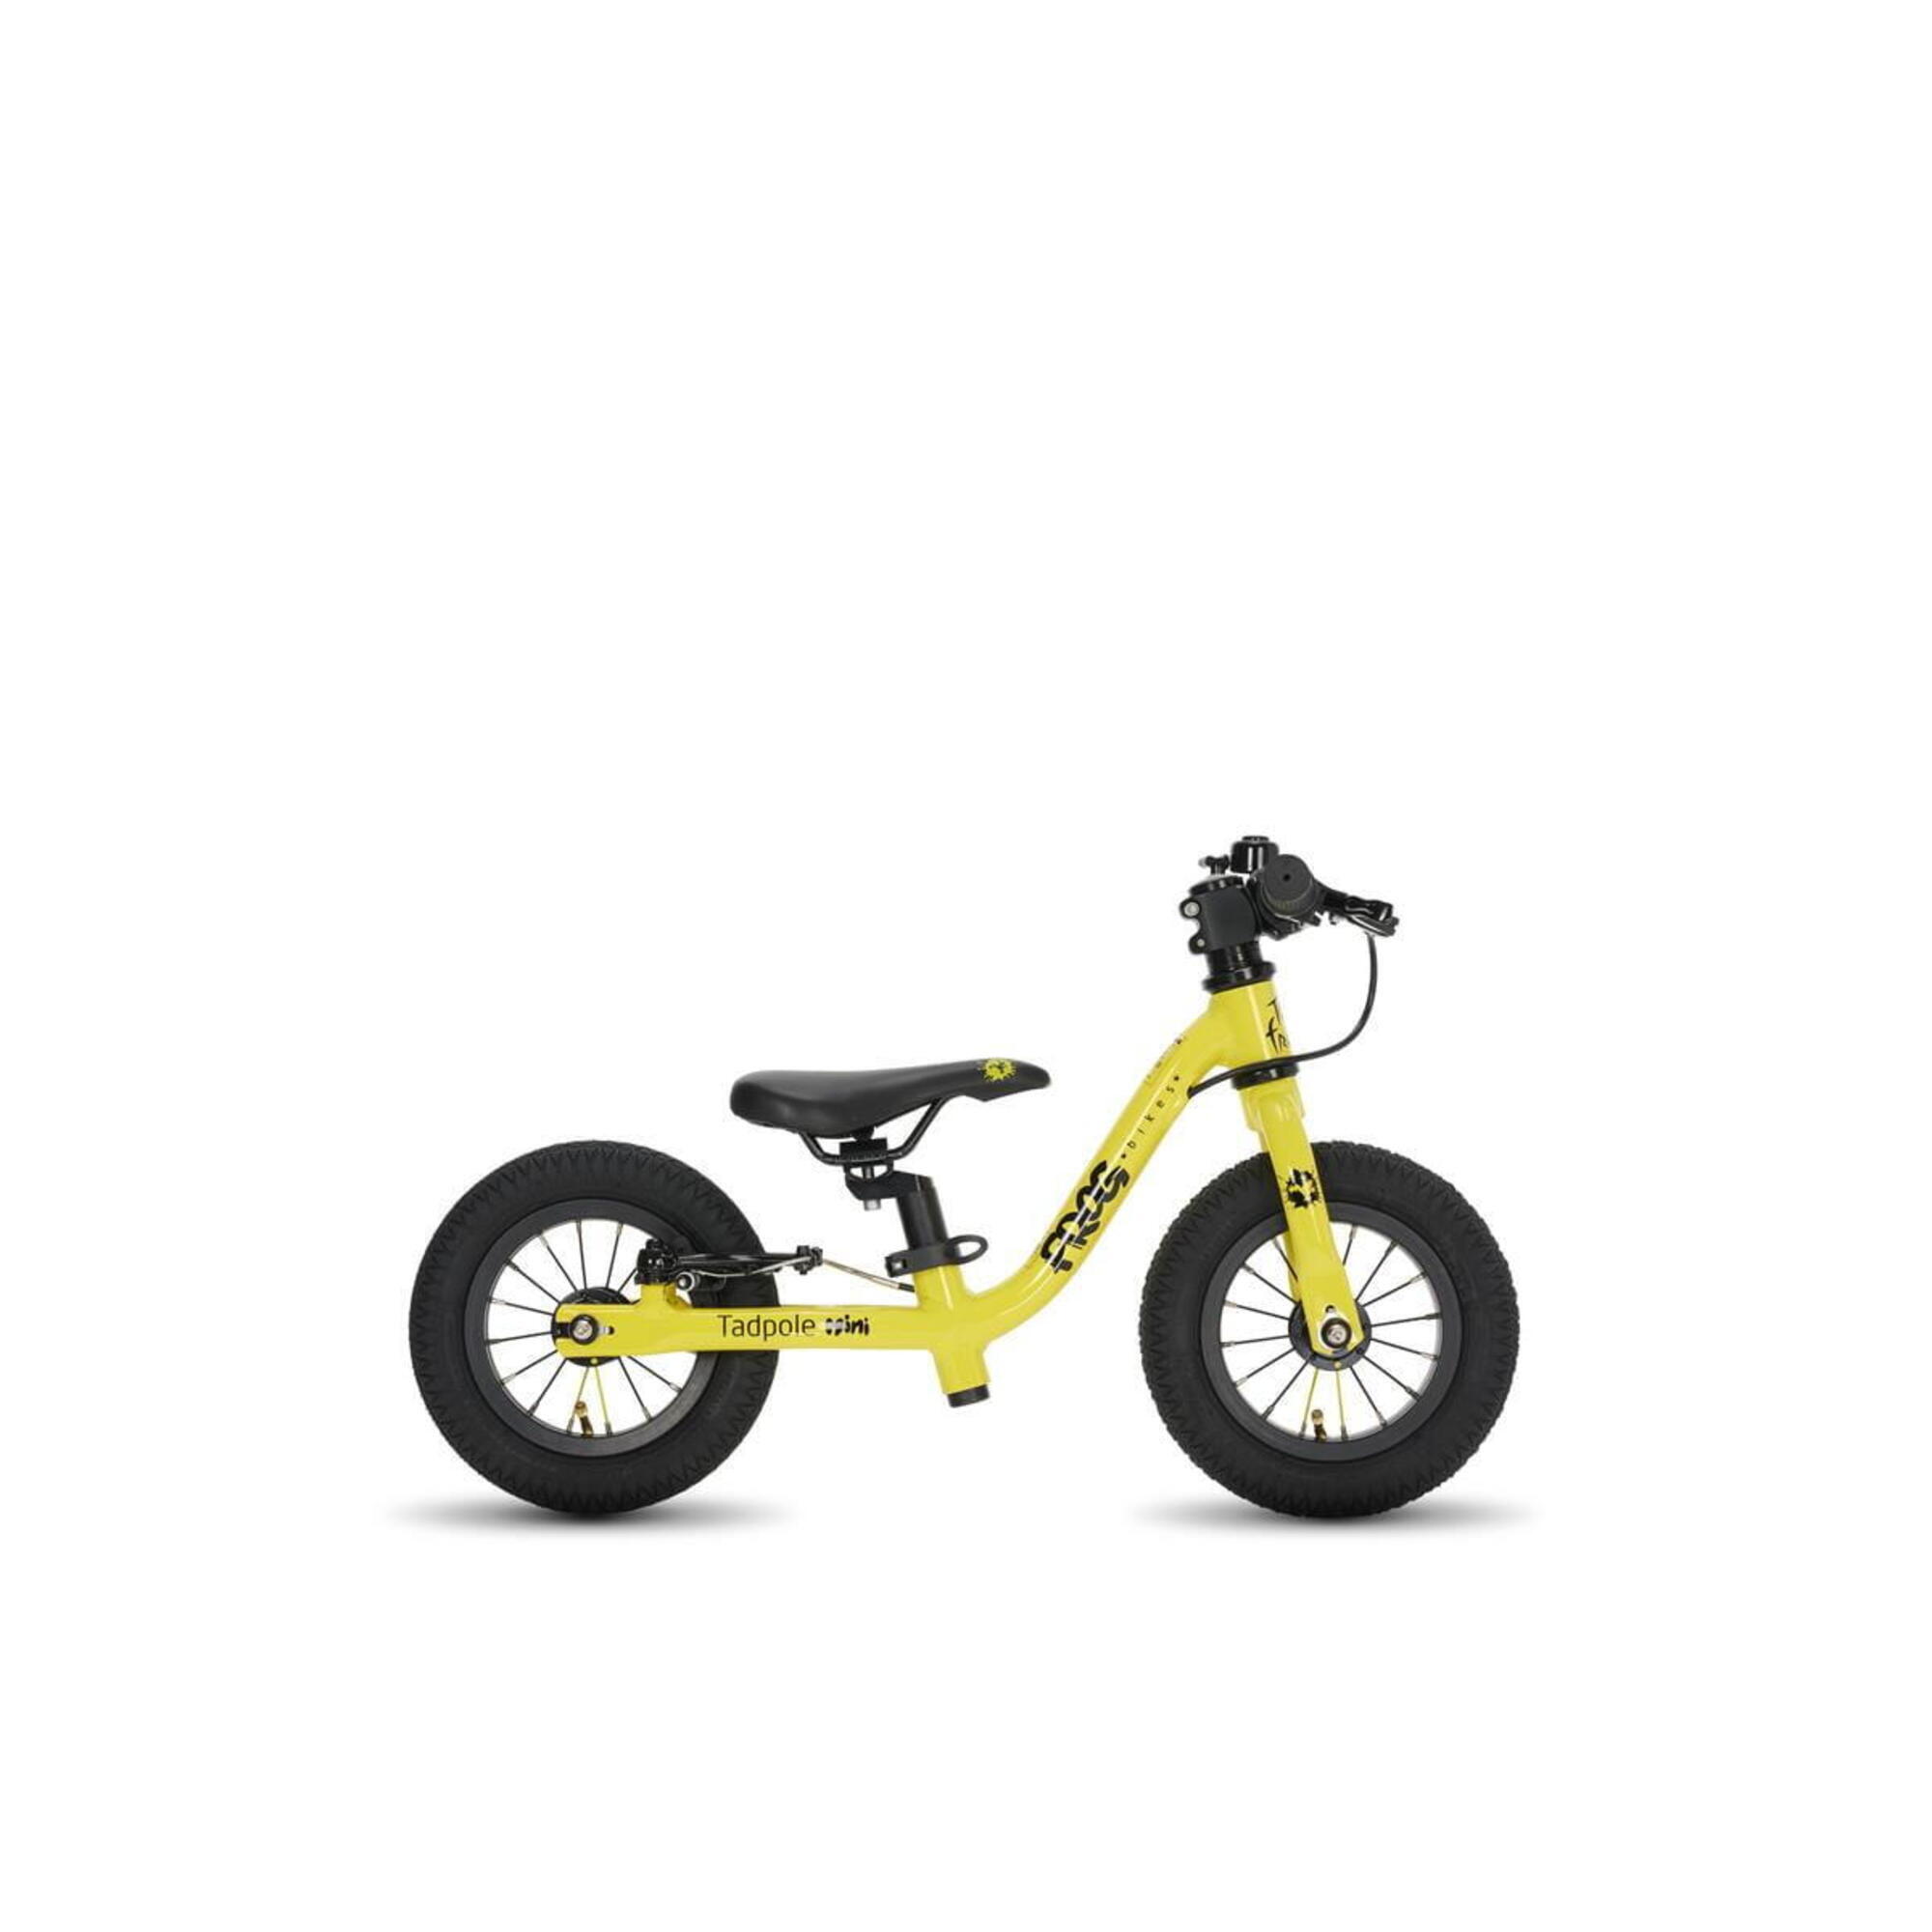 Tadpole Mini 10" Lightweight Kids Balance Bike 18 months to 2 Years - TdF Yellow 1/6